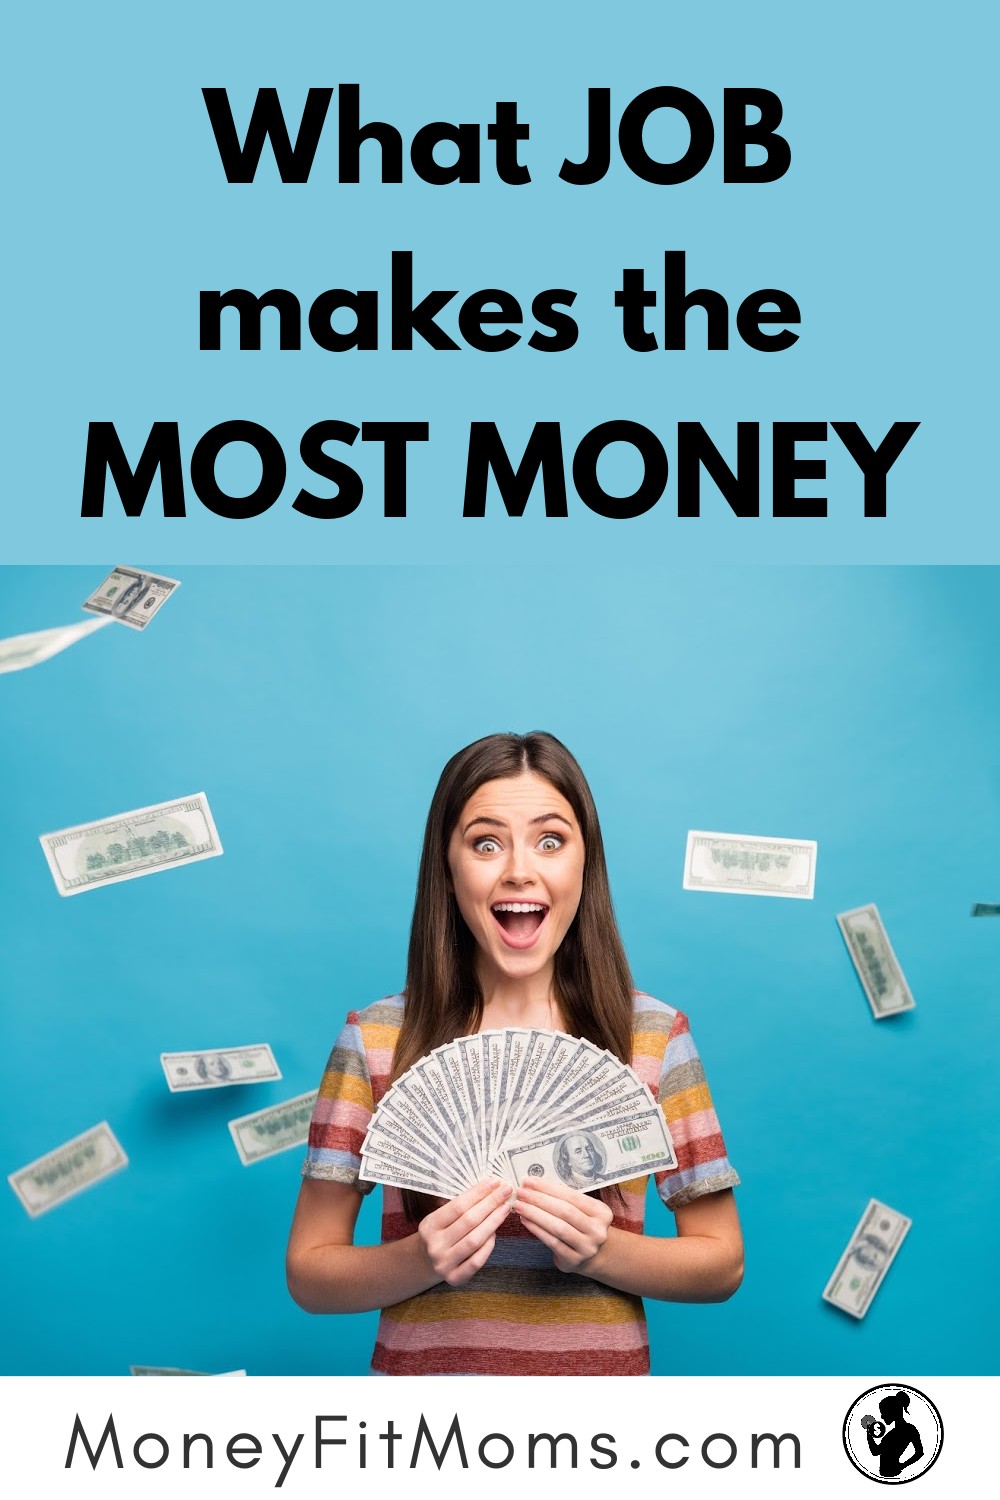 What job makes the most money? MoneyFitMoms.com